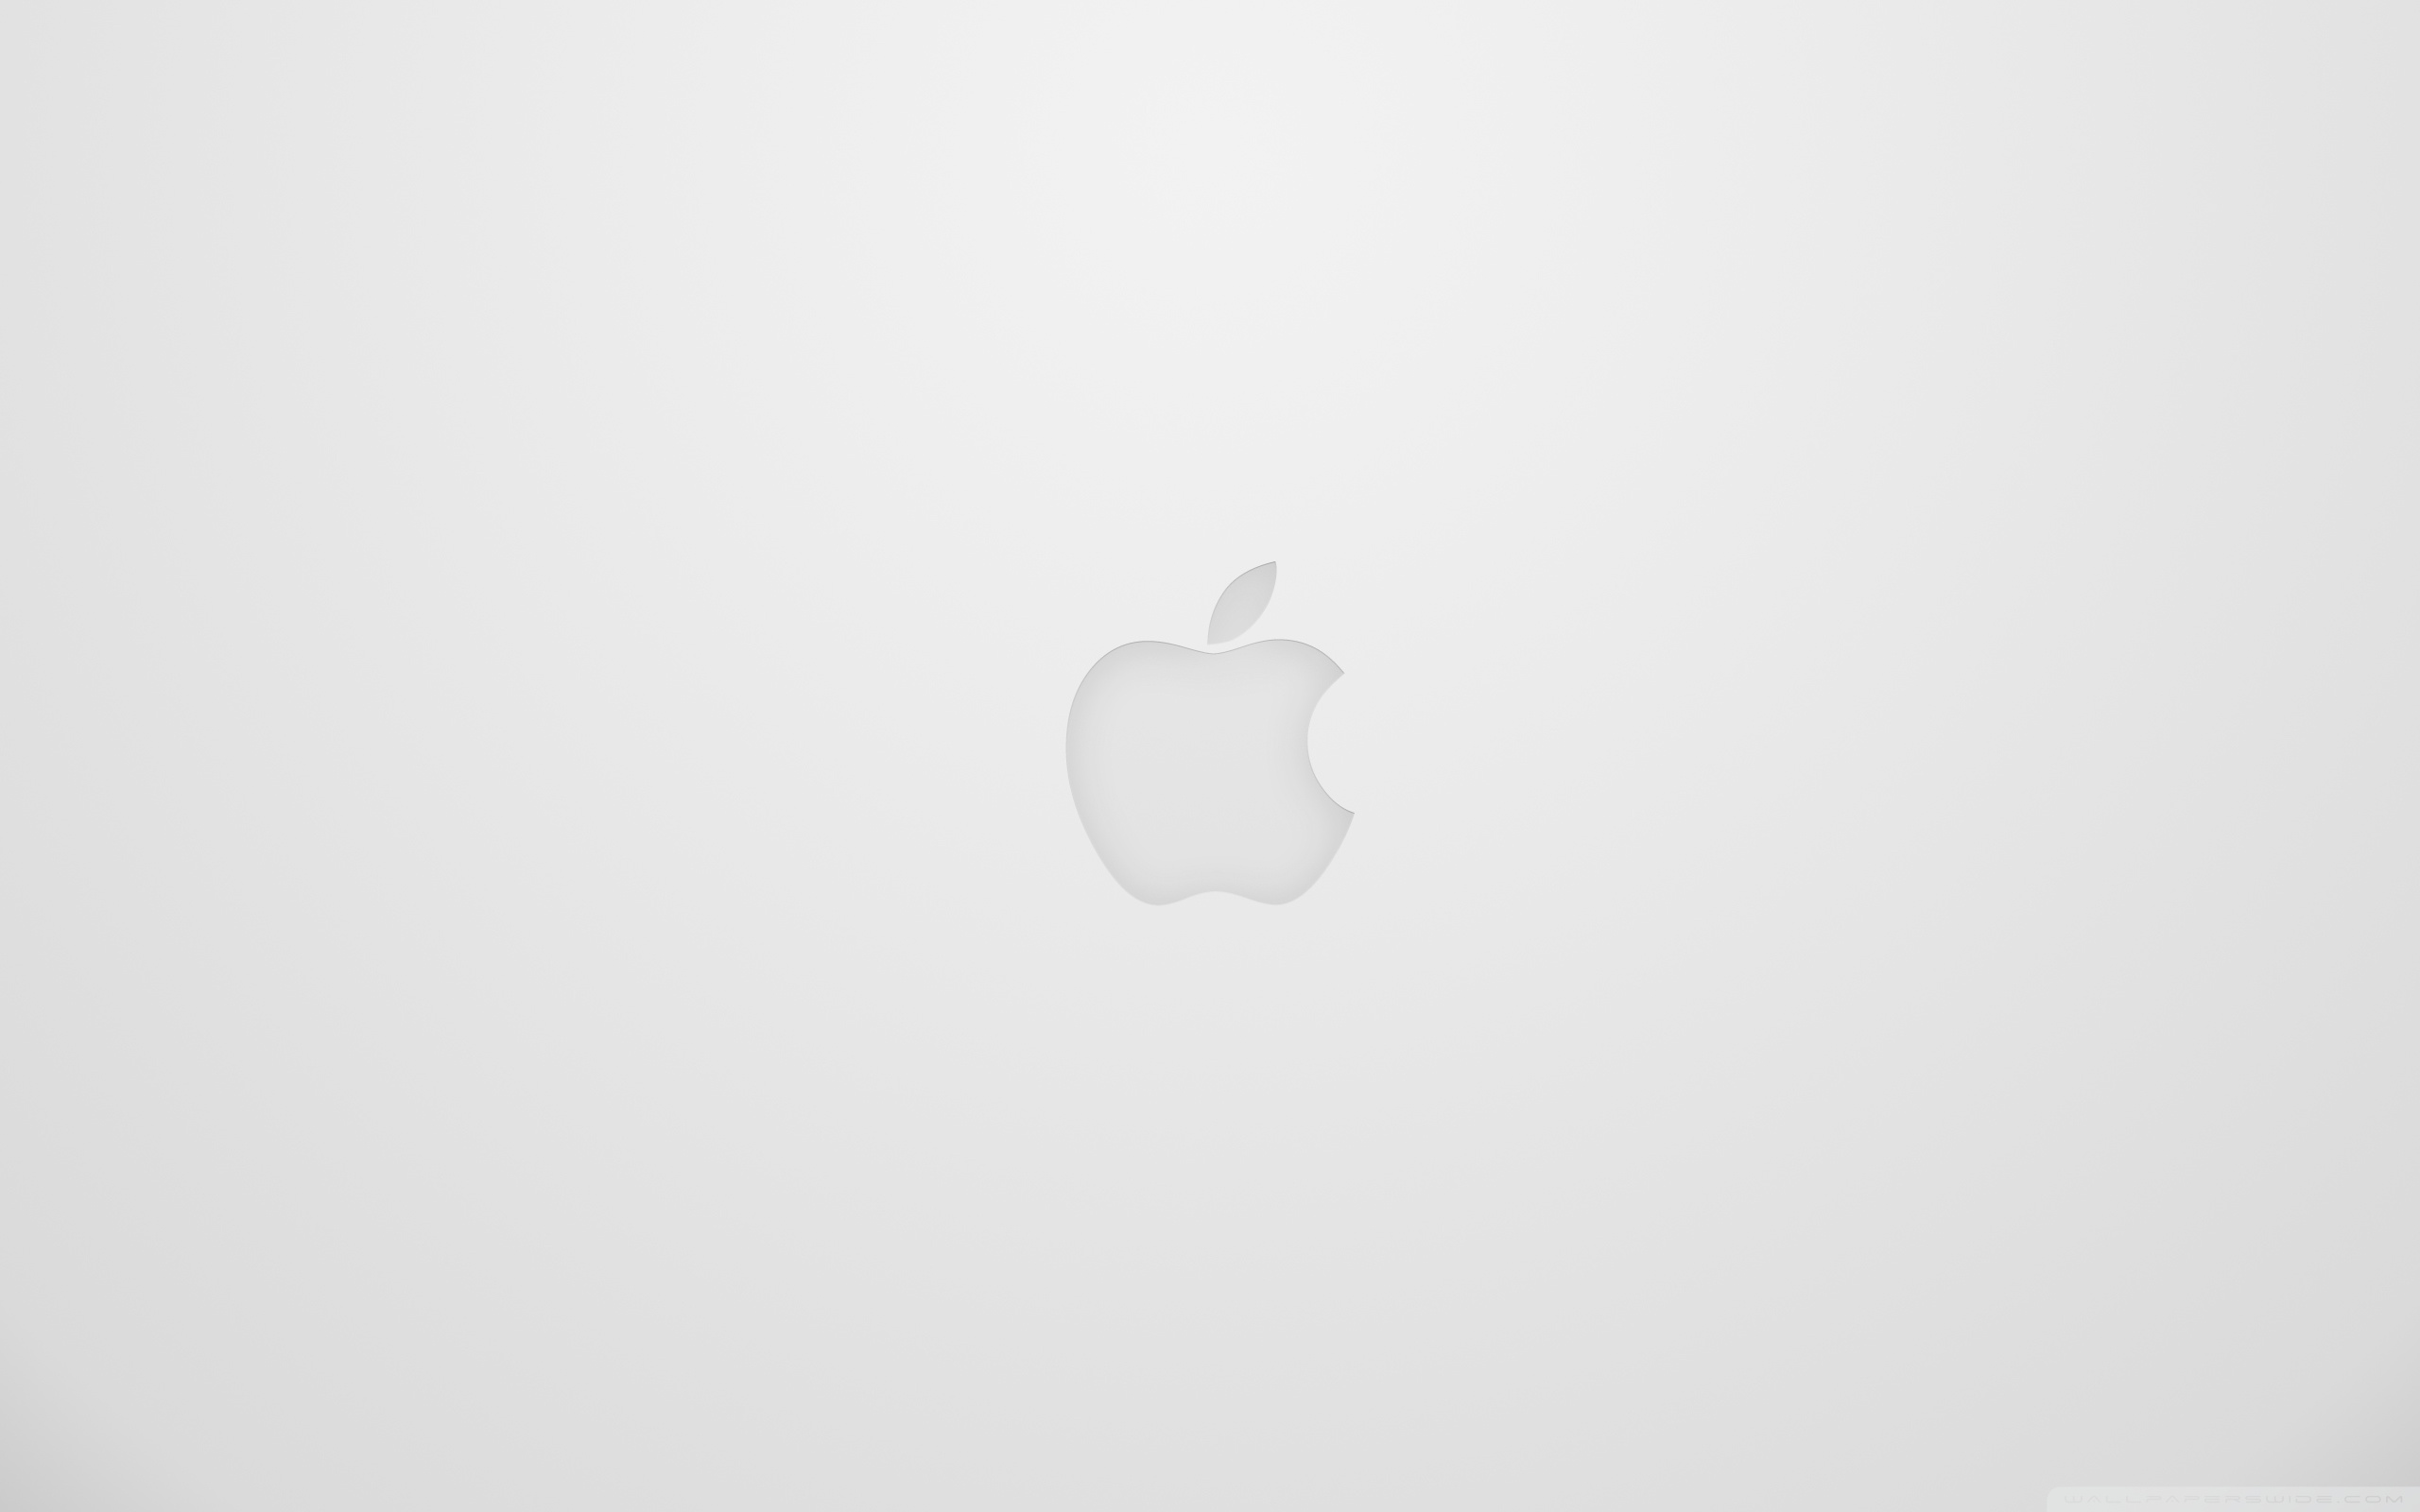 Apple Logo White Background